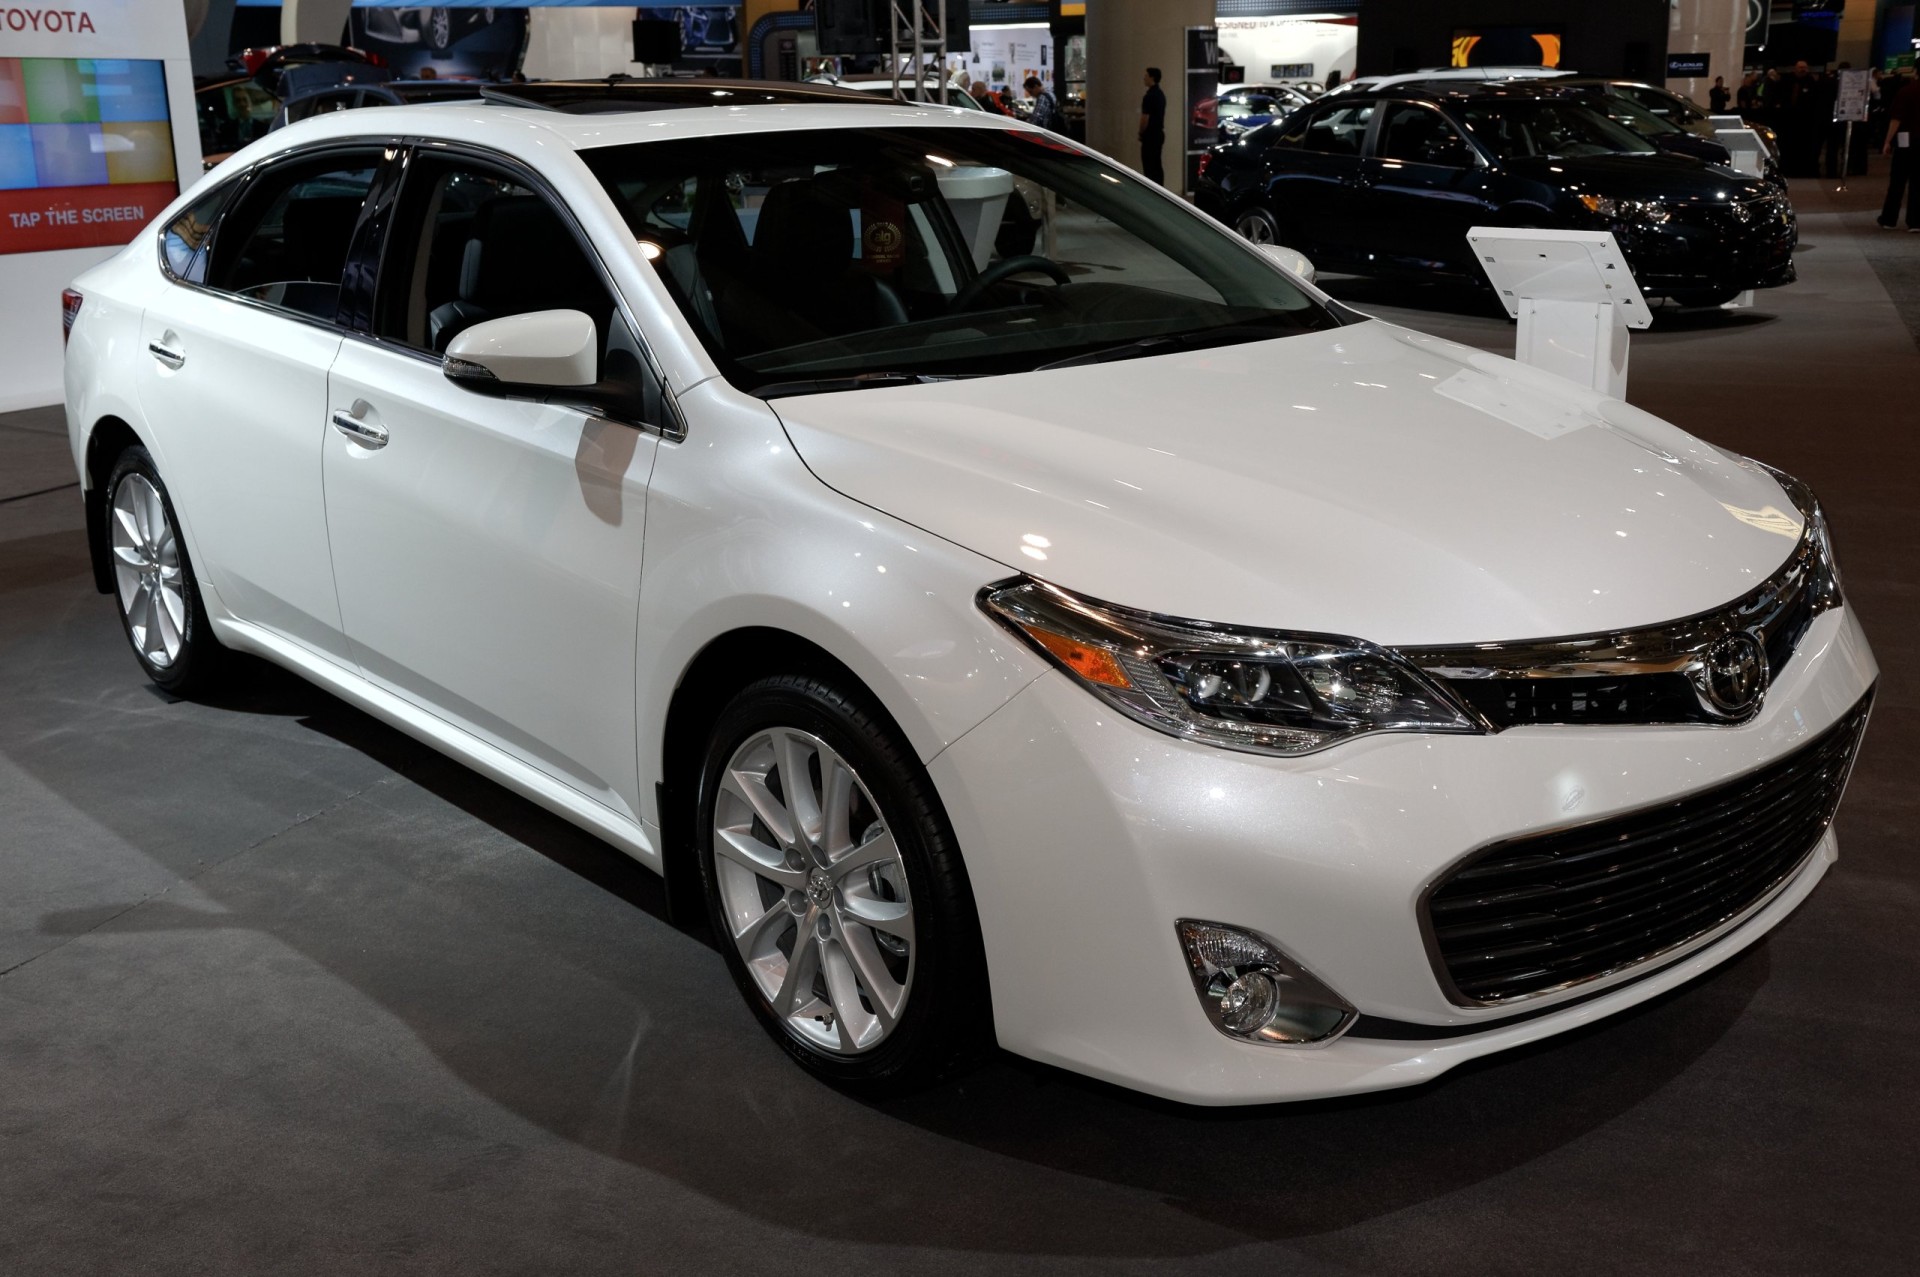 White 2013-2014 Toyota Avalon on display at an auto show